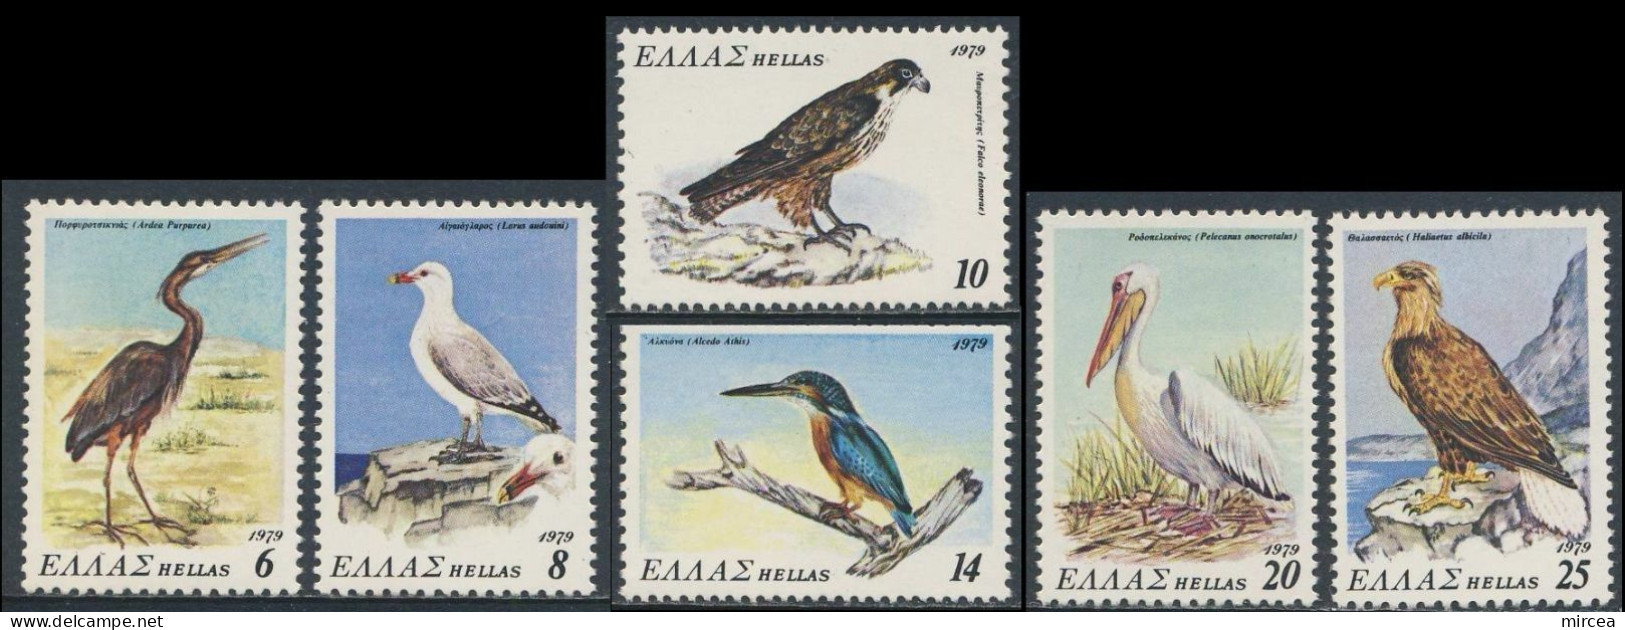 C5304 - Grece 1979 - Oiseaux 6v.neufs** - Unused Stamps